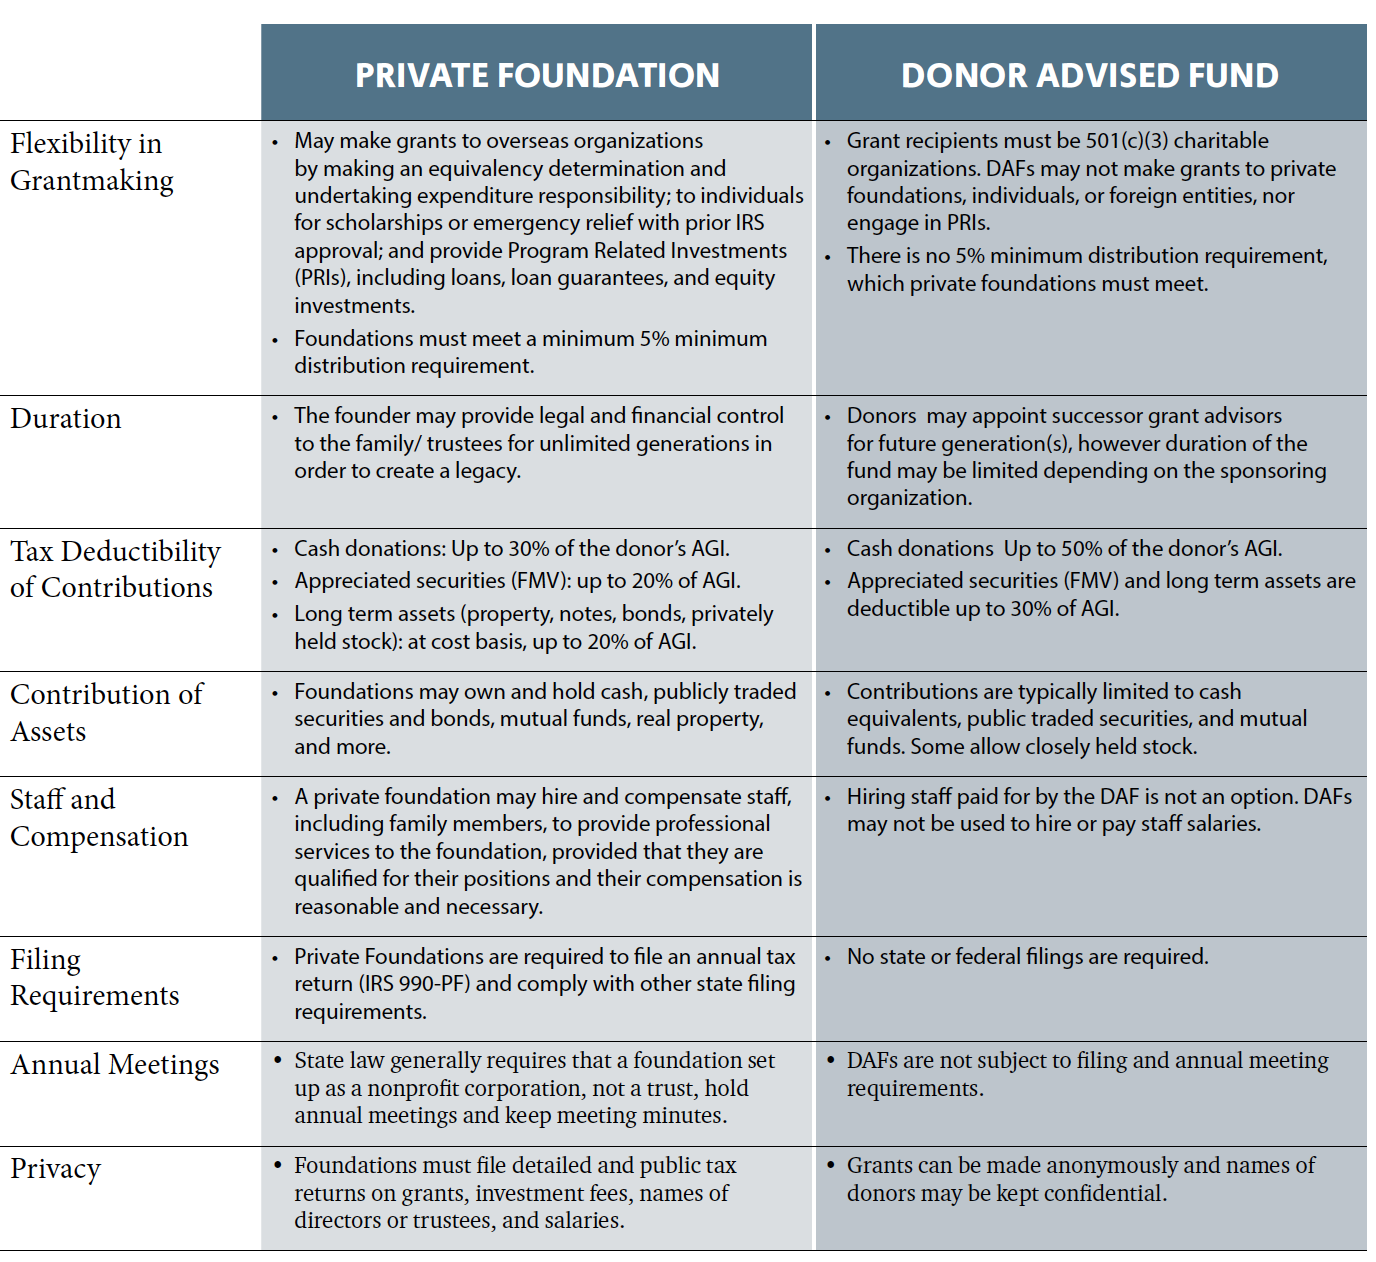 Advisers | Your trusted philanthropy partner | CAF